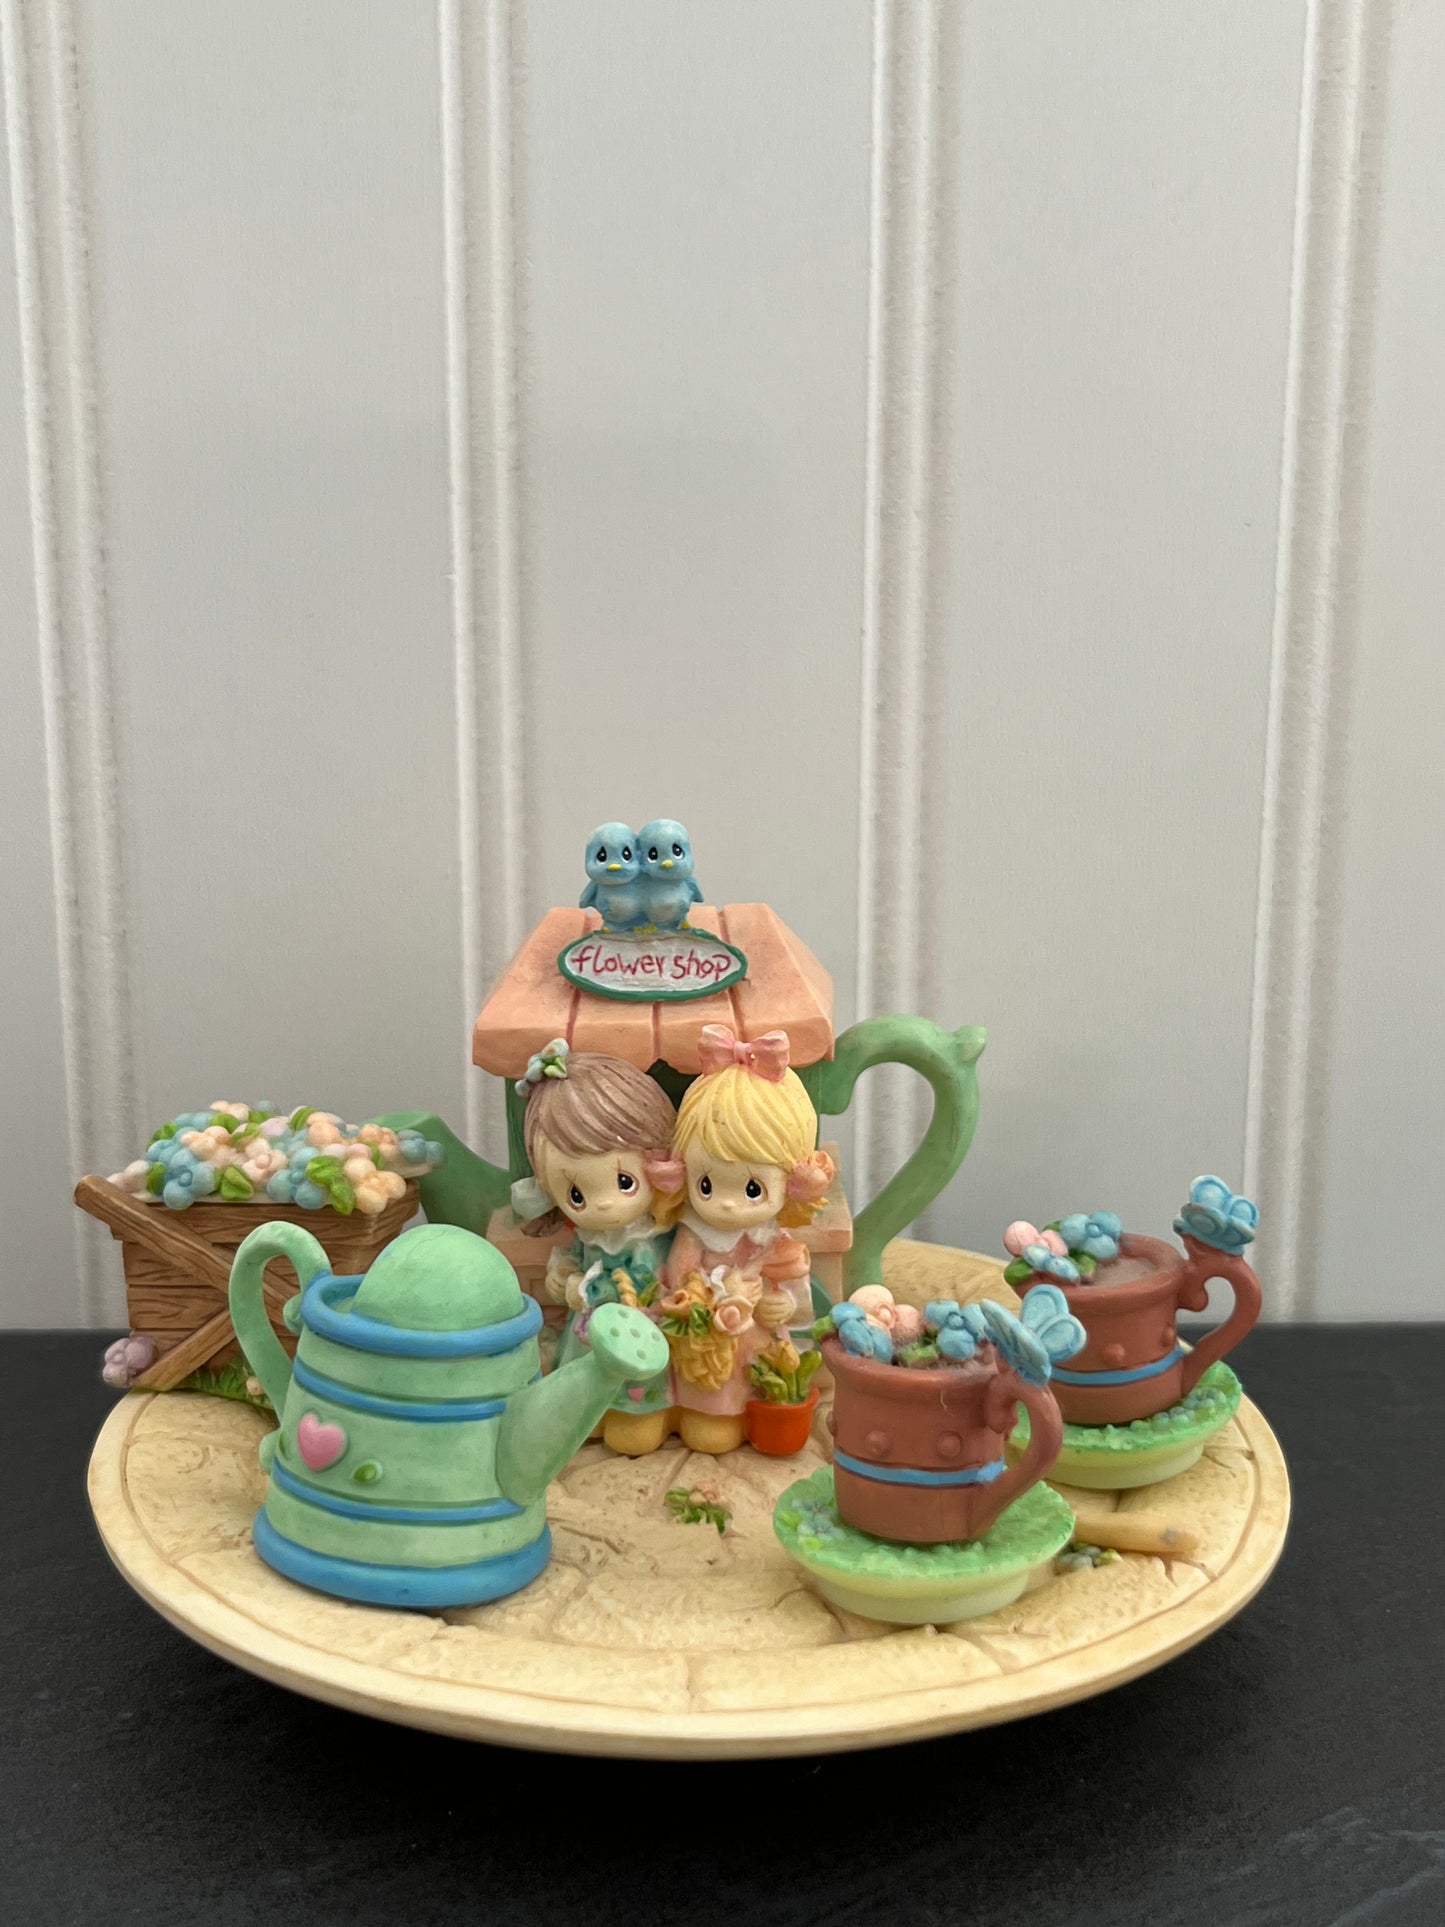 Flower Shop Resin Miniature Floral Tea Set - Precious Moments 482579 1998 Mini Teaset By Enesco